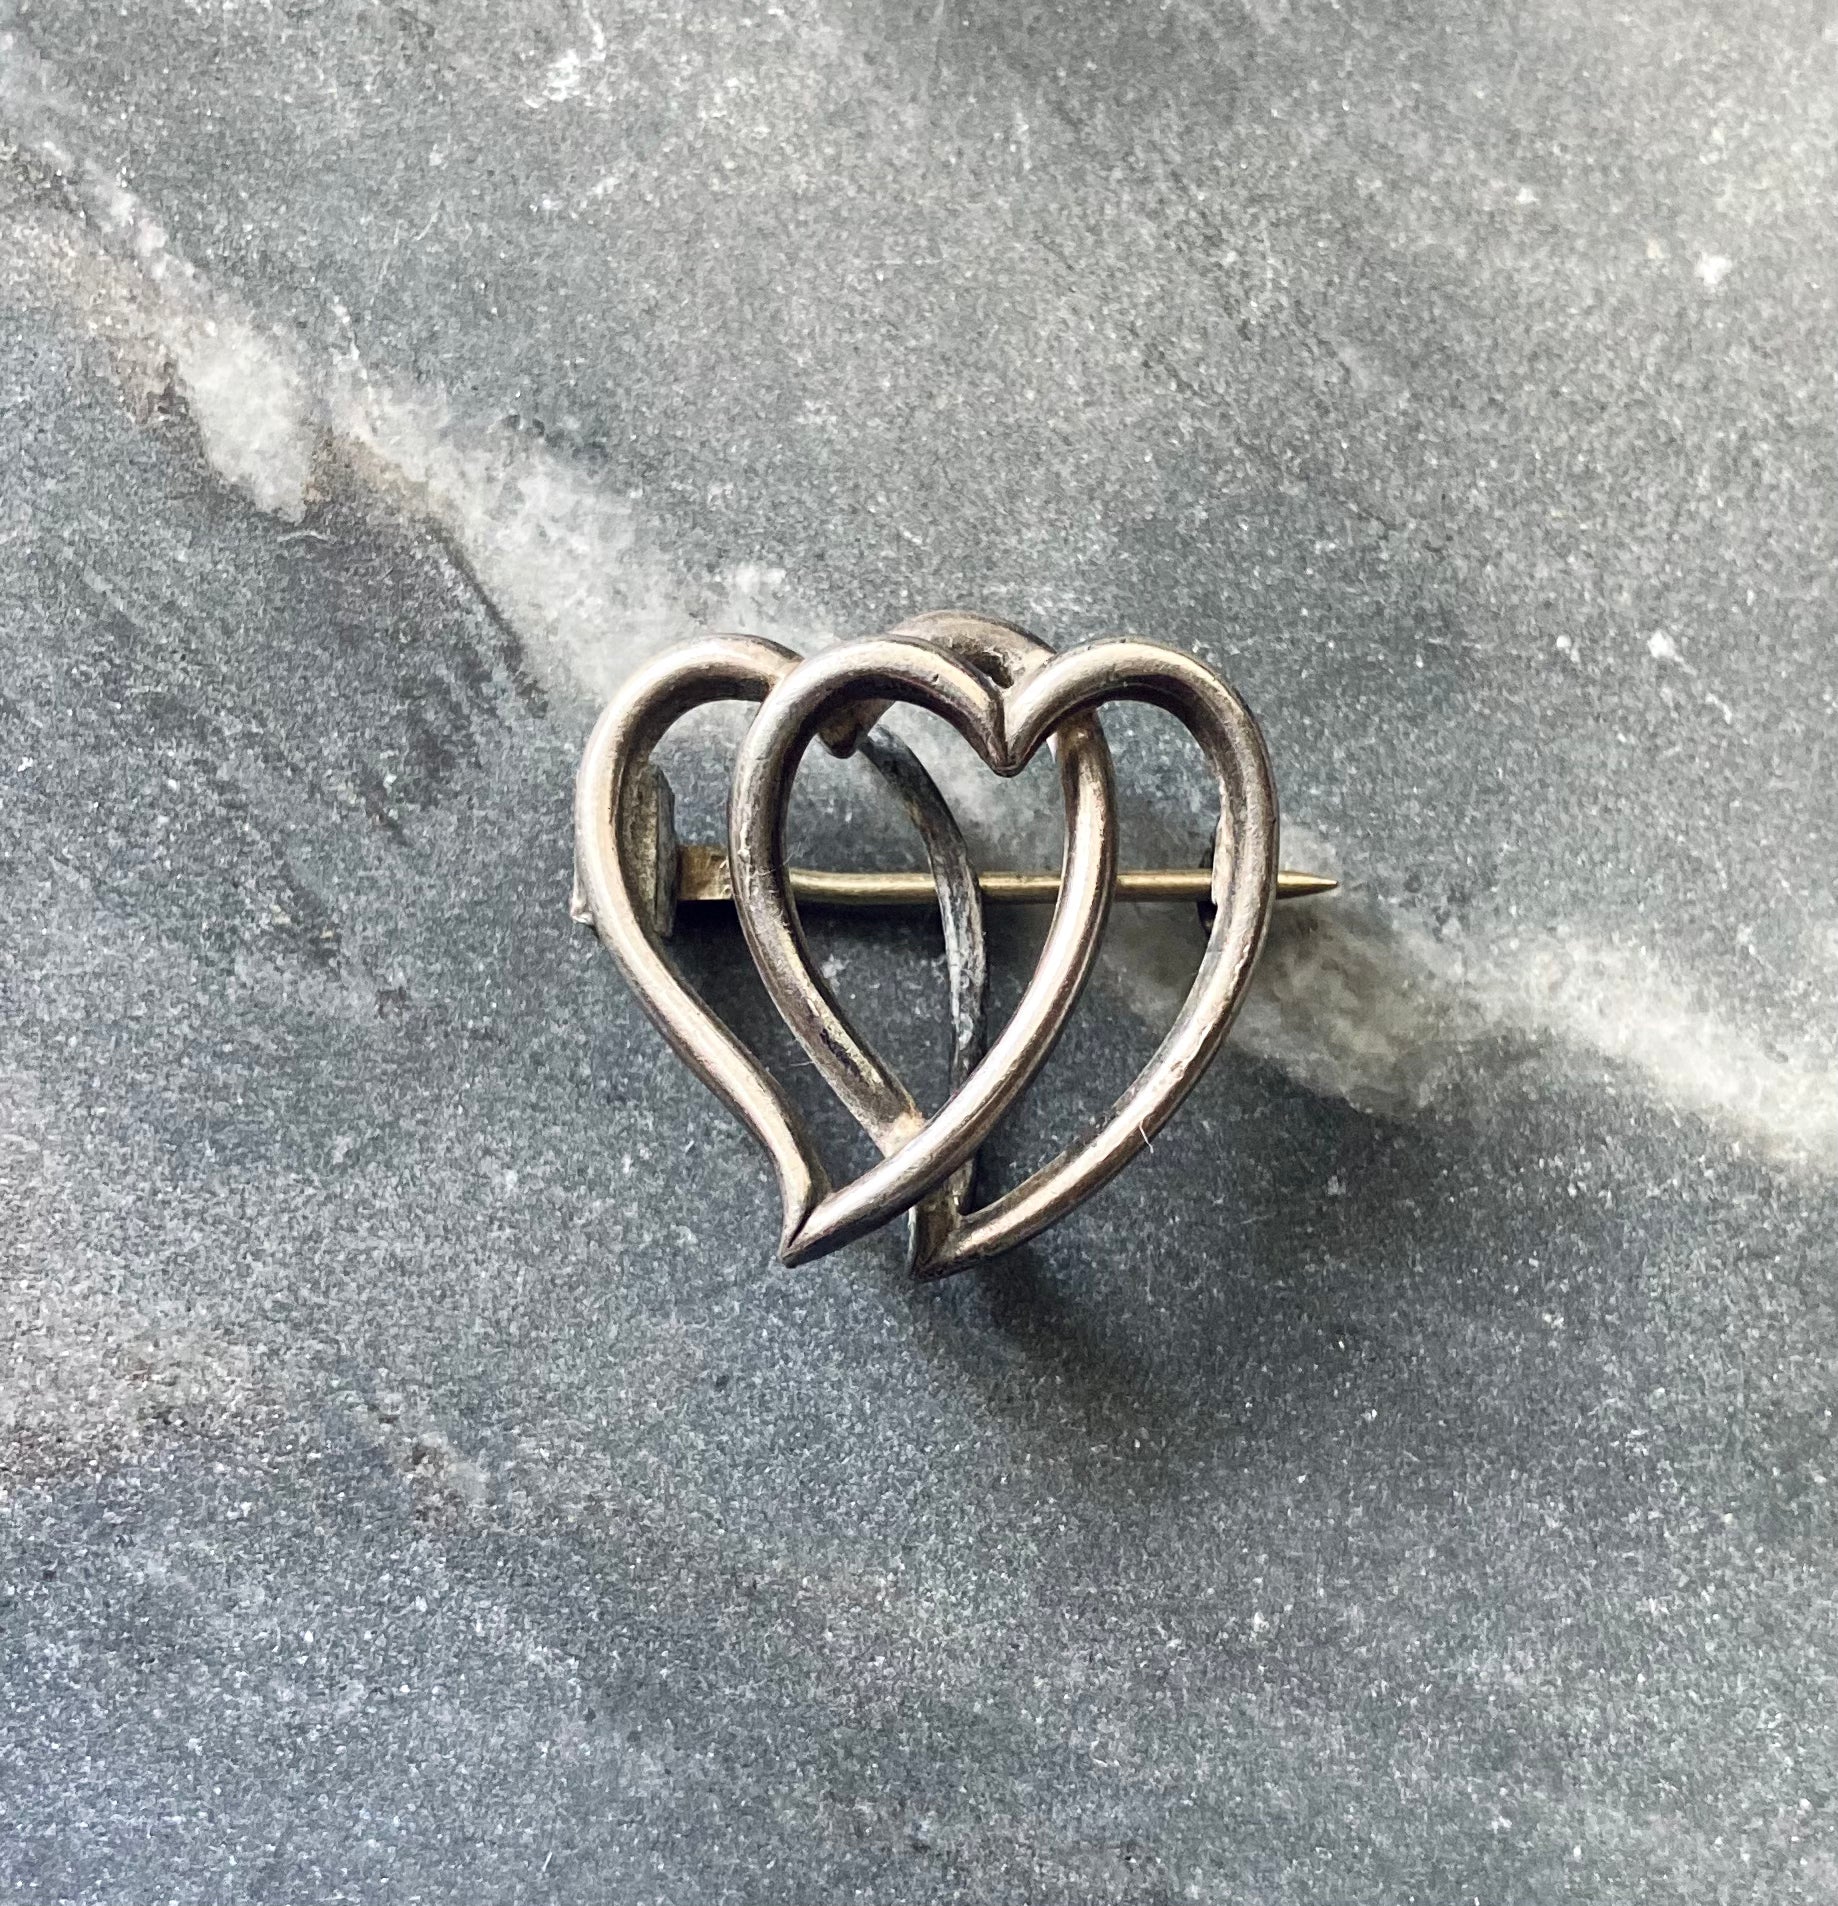 Antique victorian silver double heart sweetheart locket holder brooch